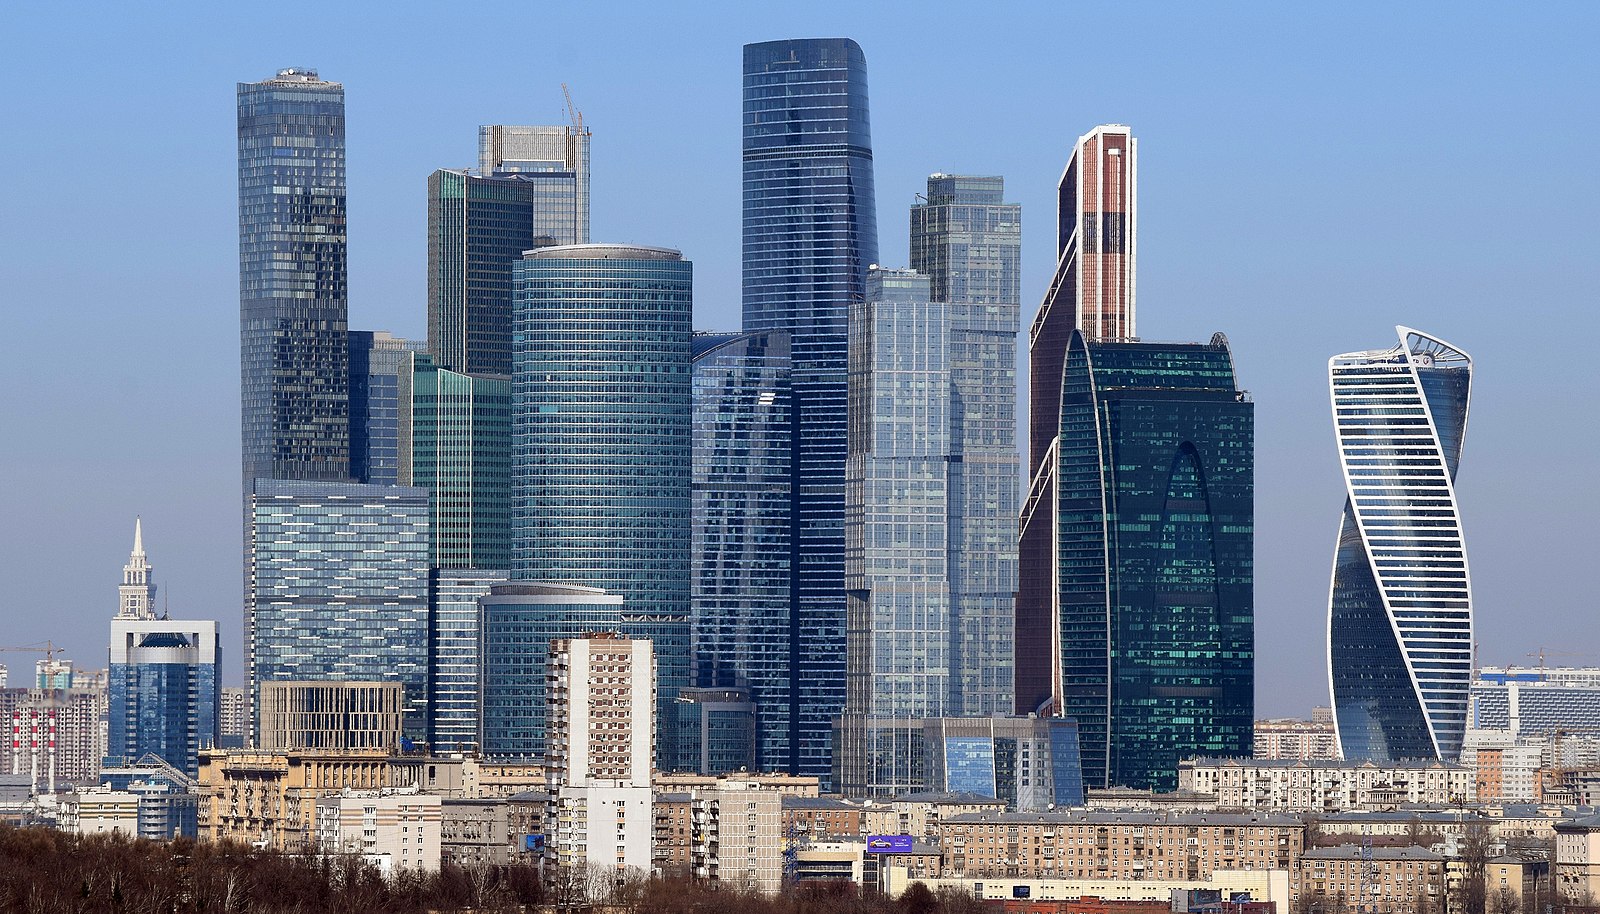 Москва сити фото зданий